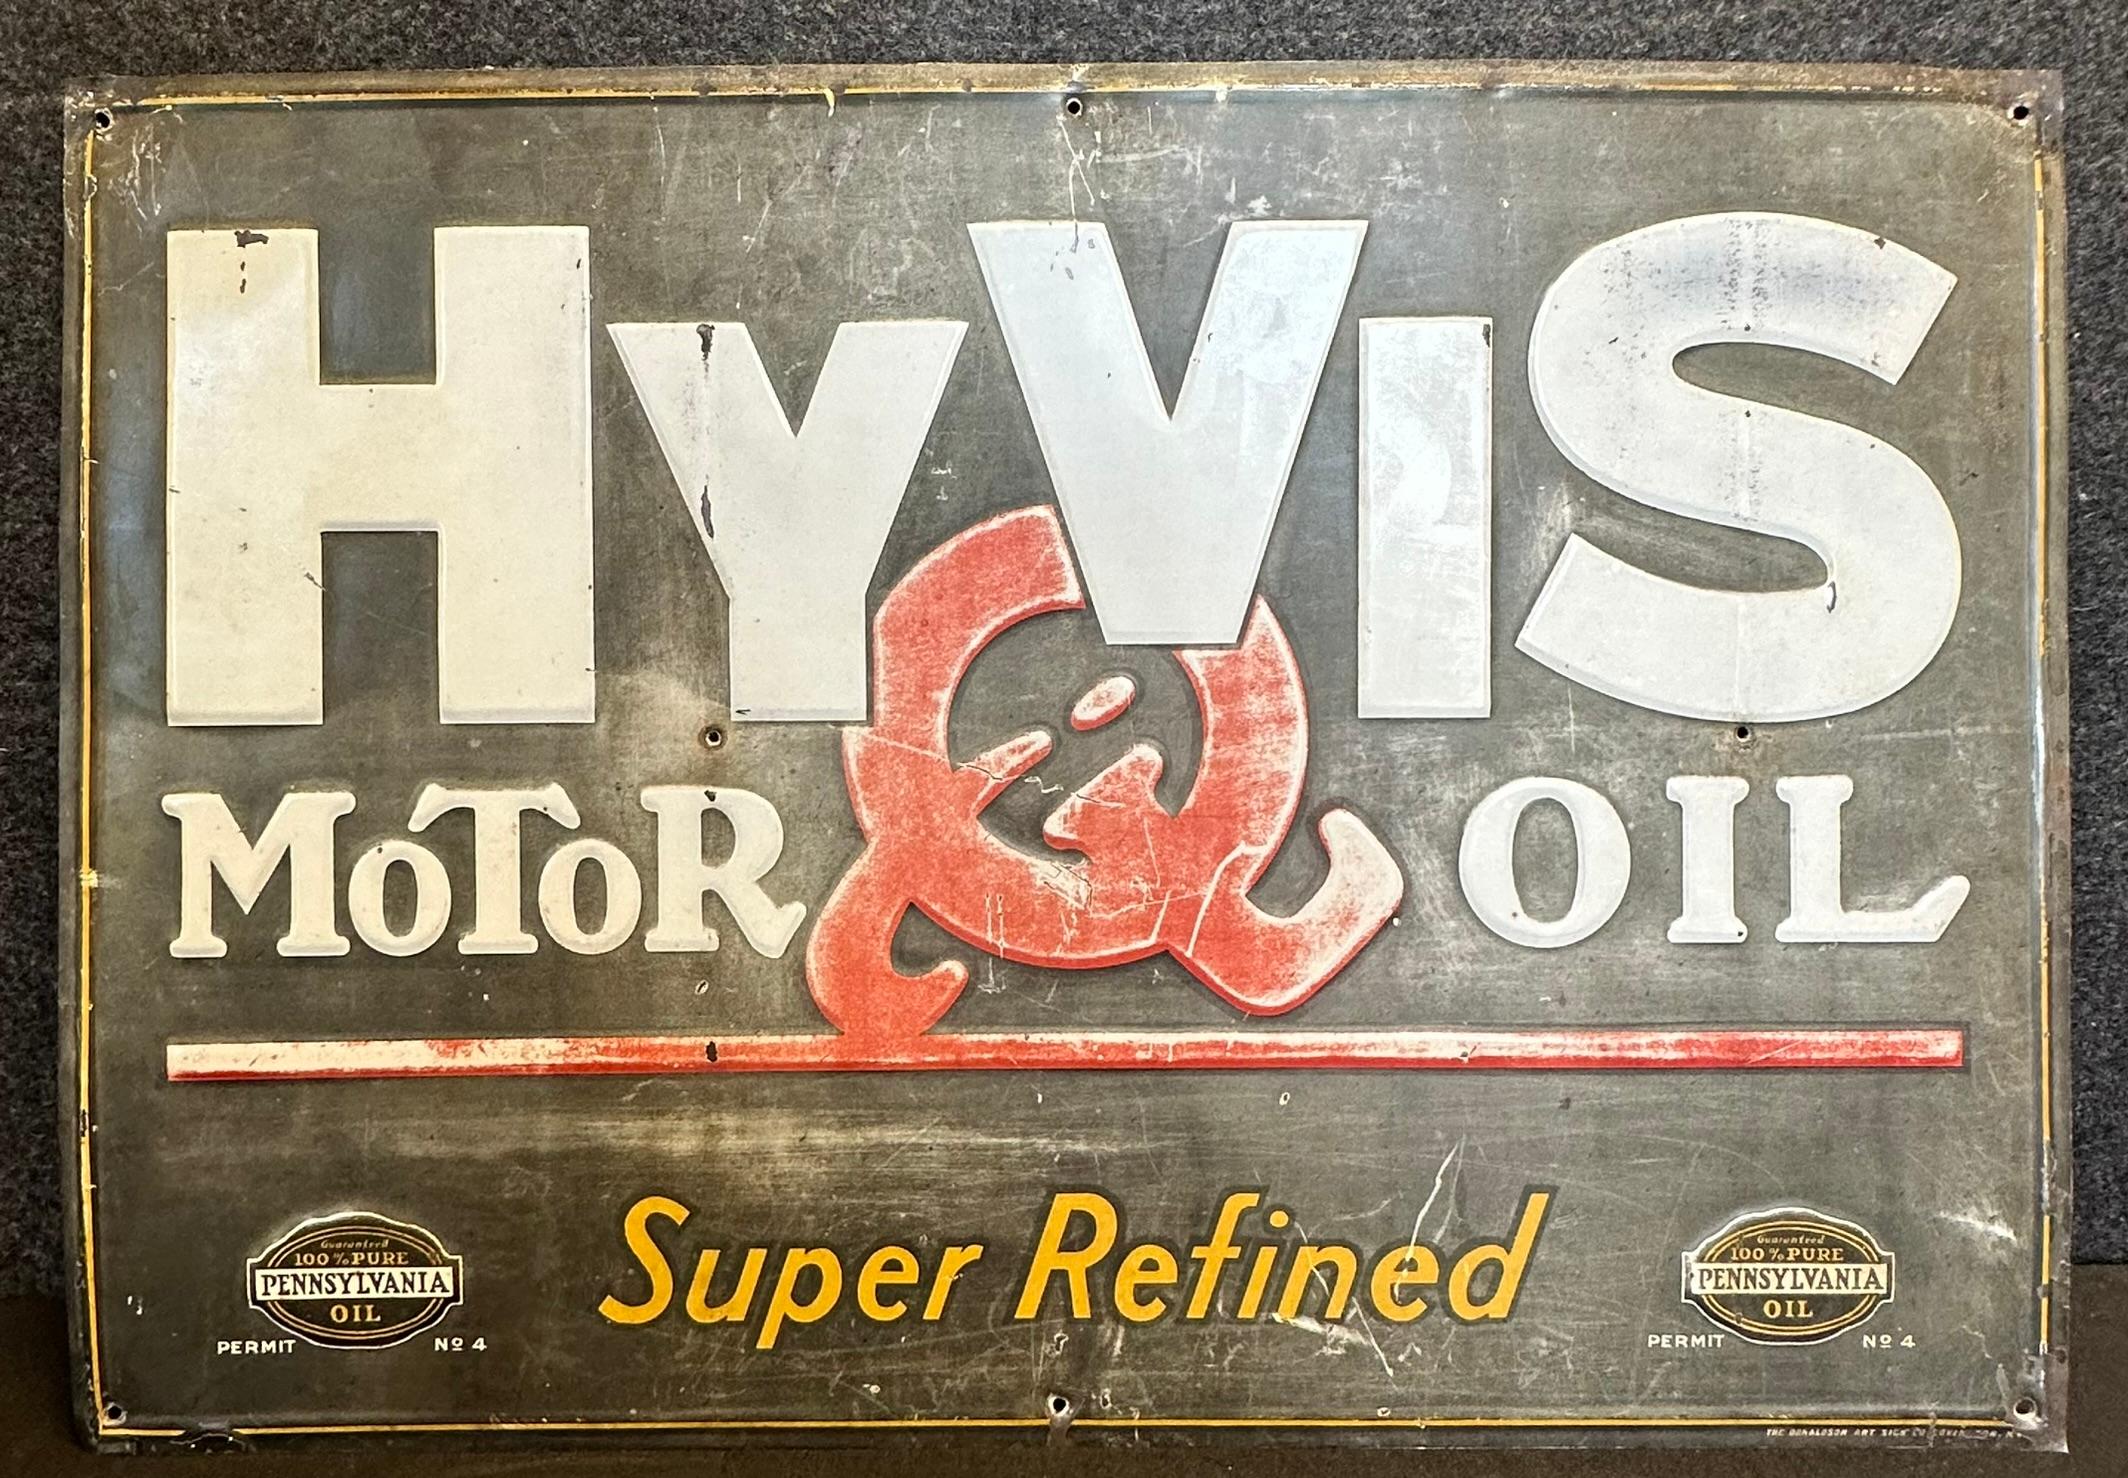 Hyvis Embossed Motor Oils Super Refined 1930s Tin Tacker Advertising Sign